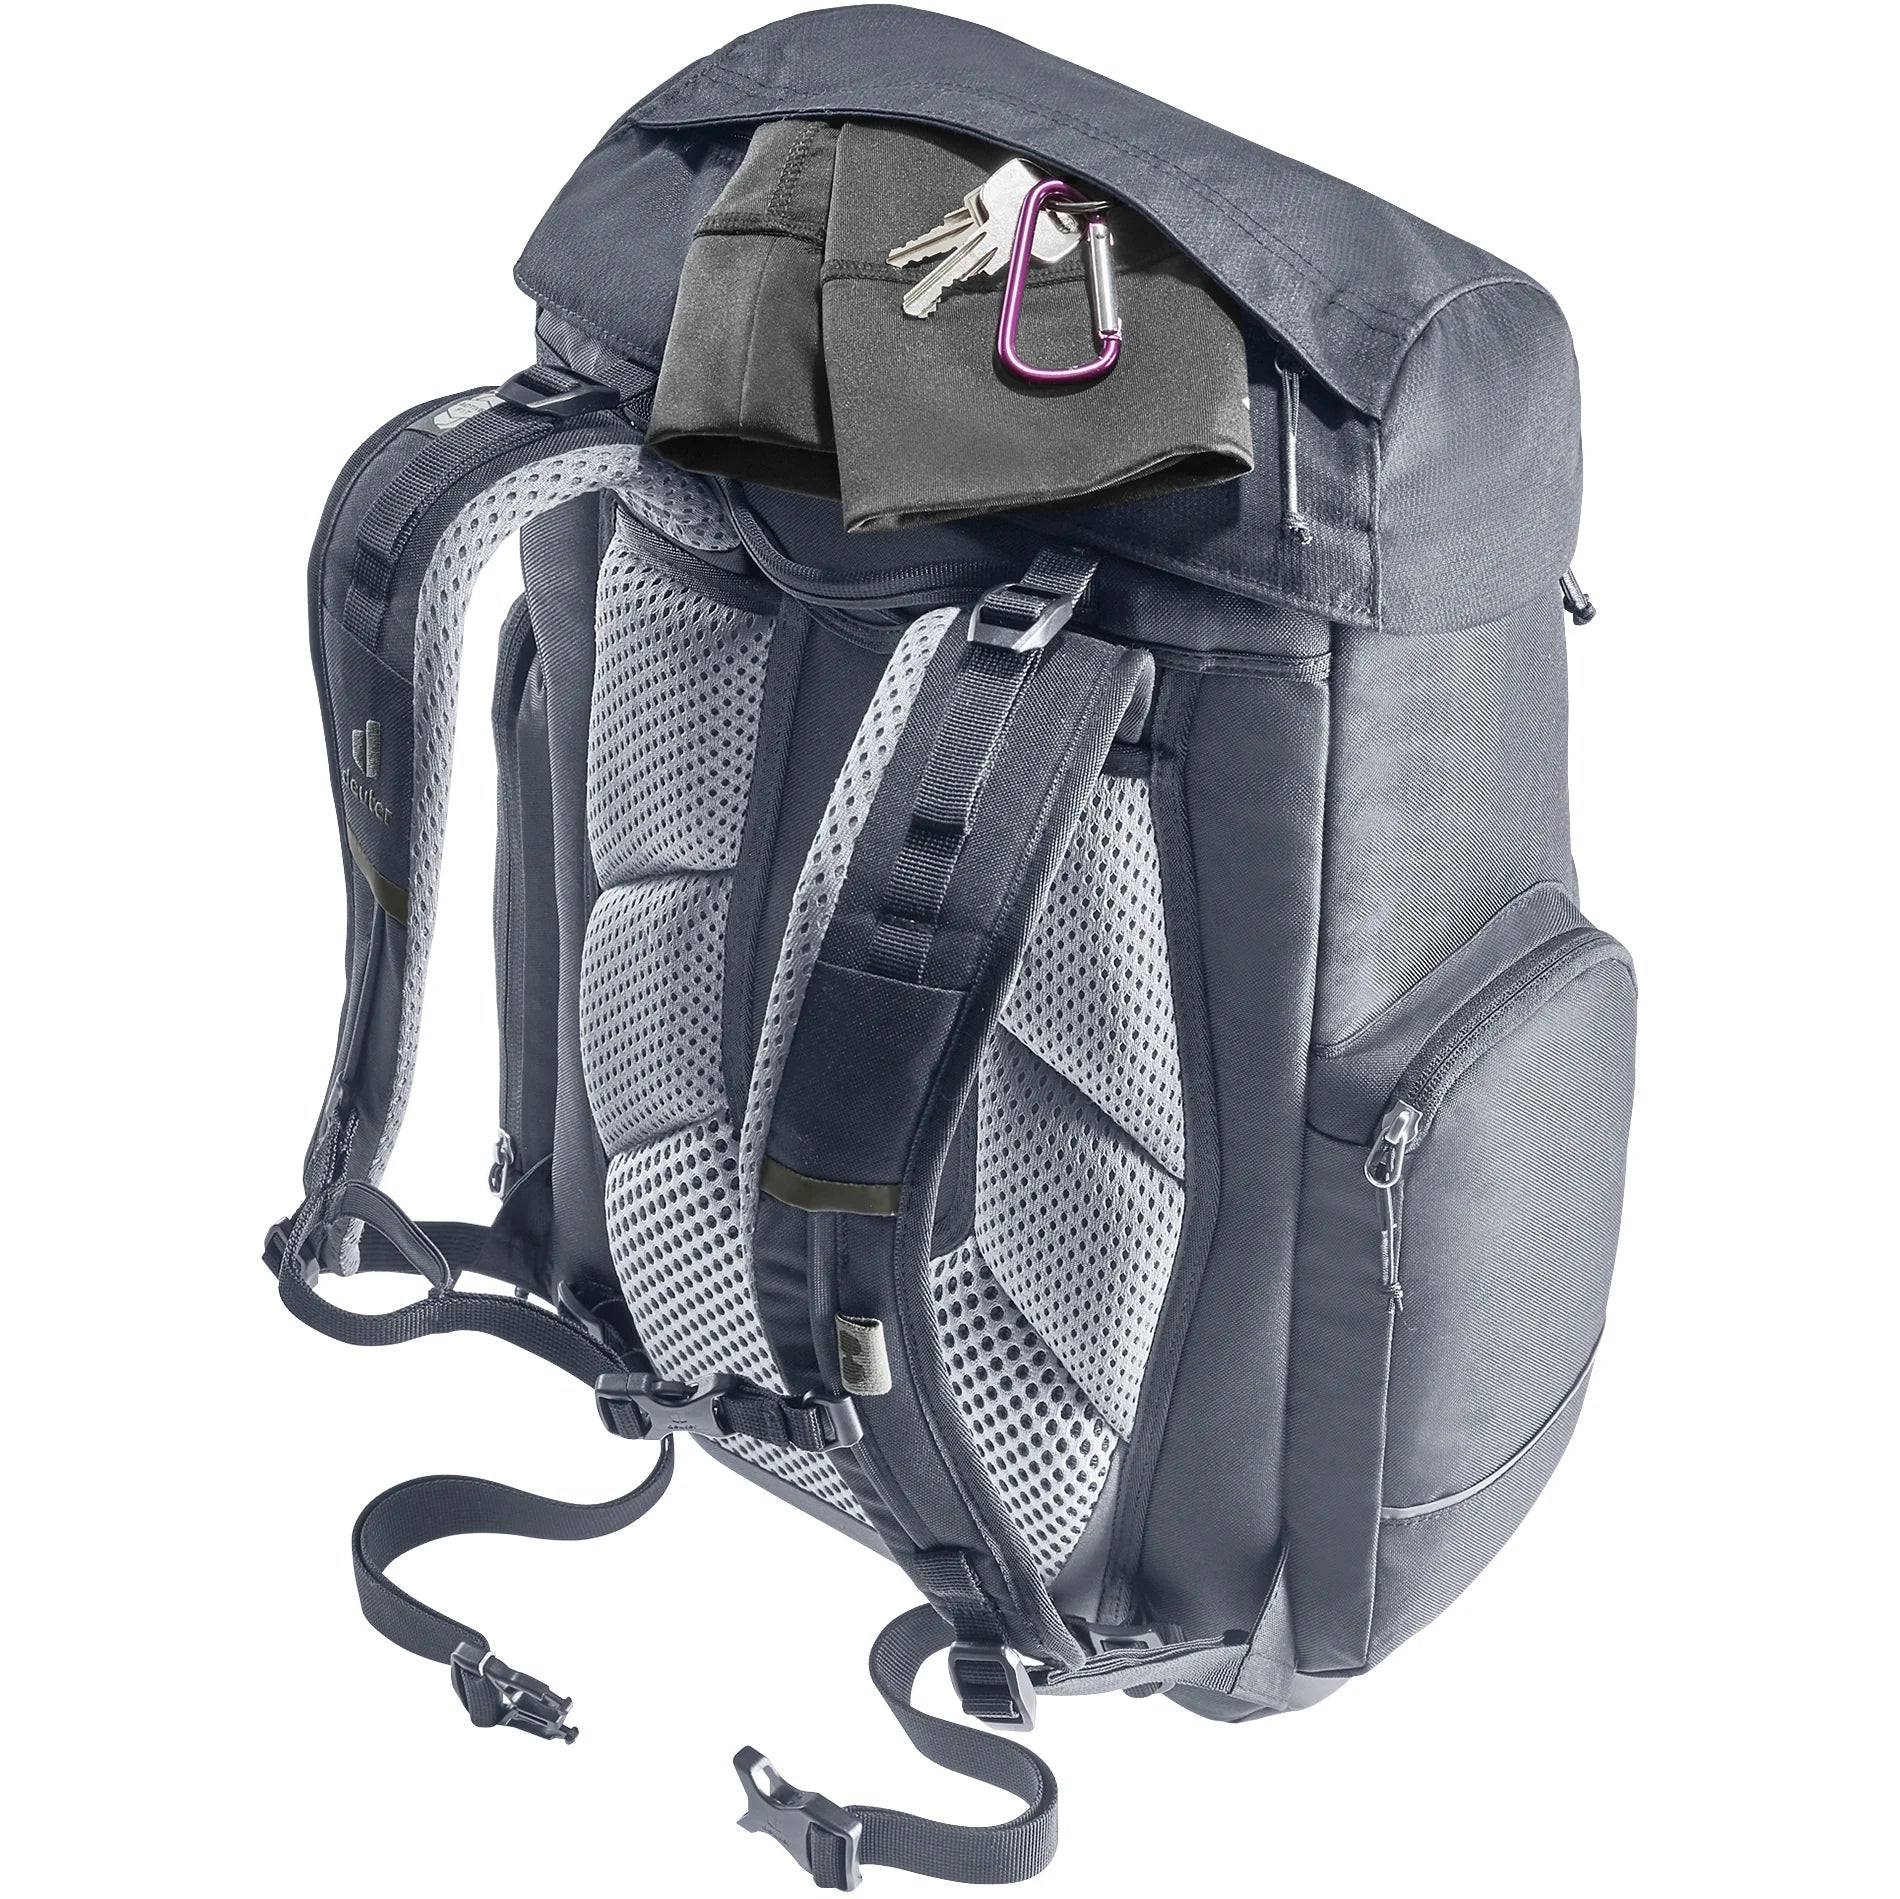 Deuter Daypack Scula school backpack 49 cm - Black